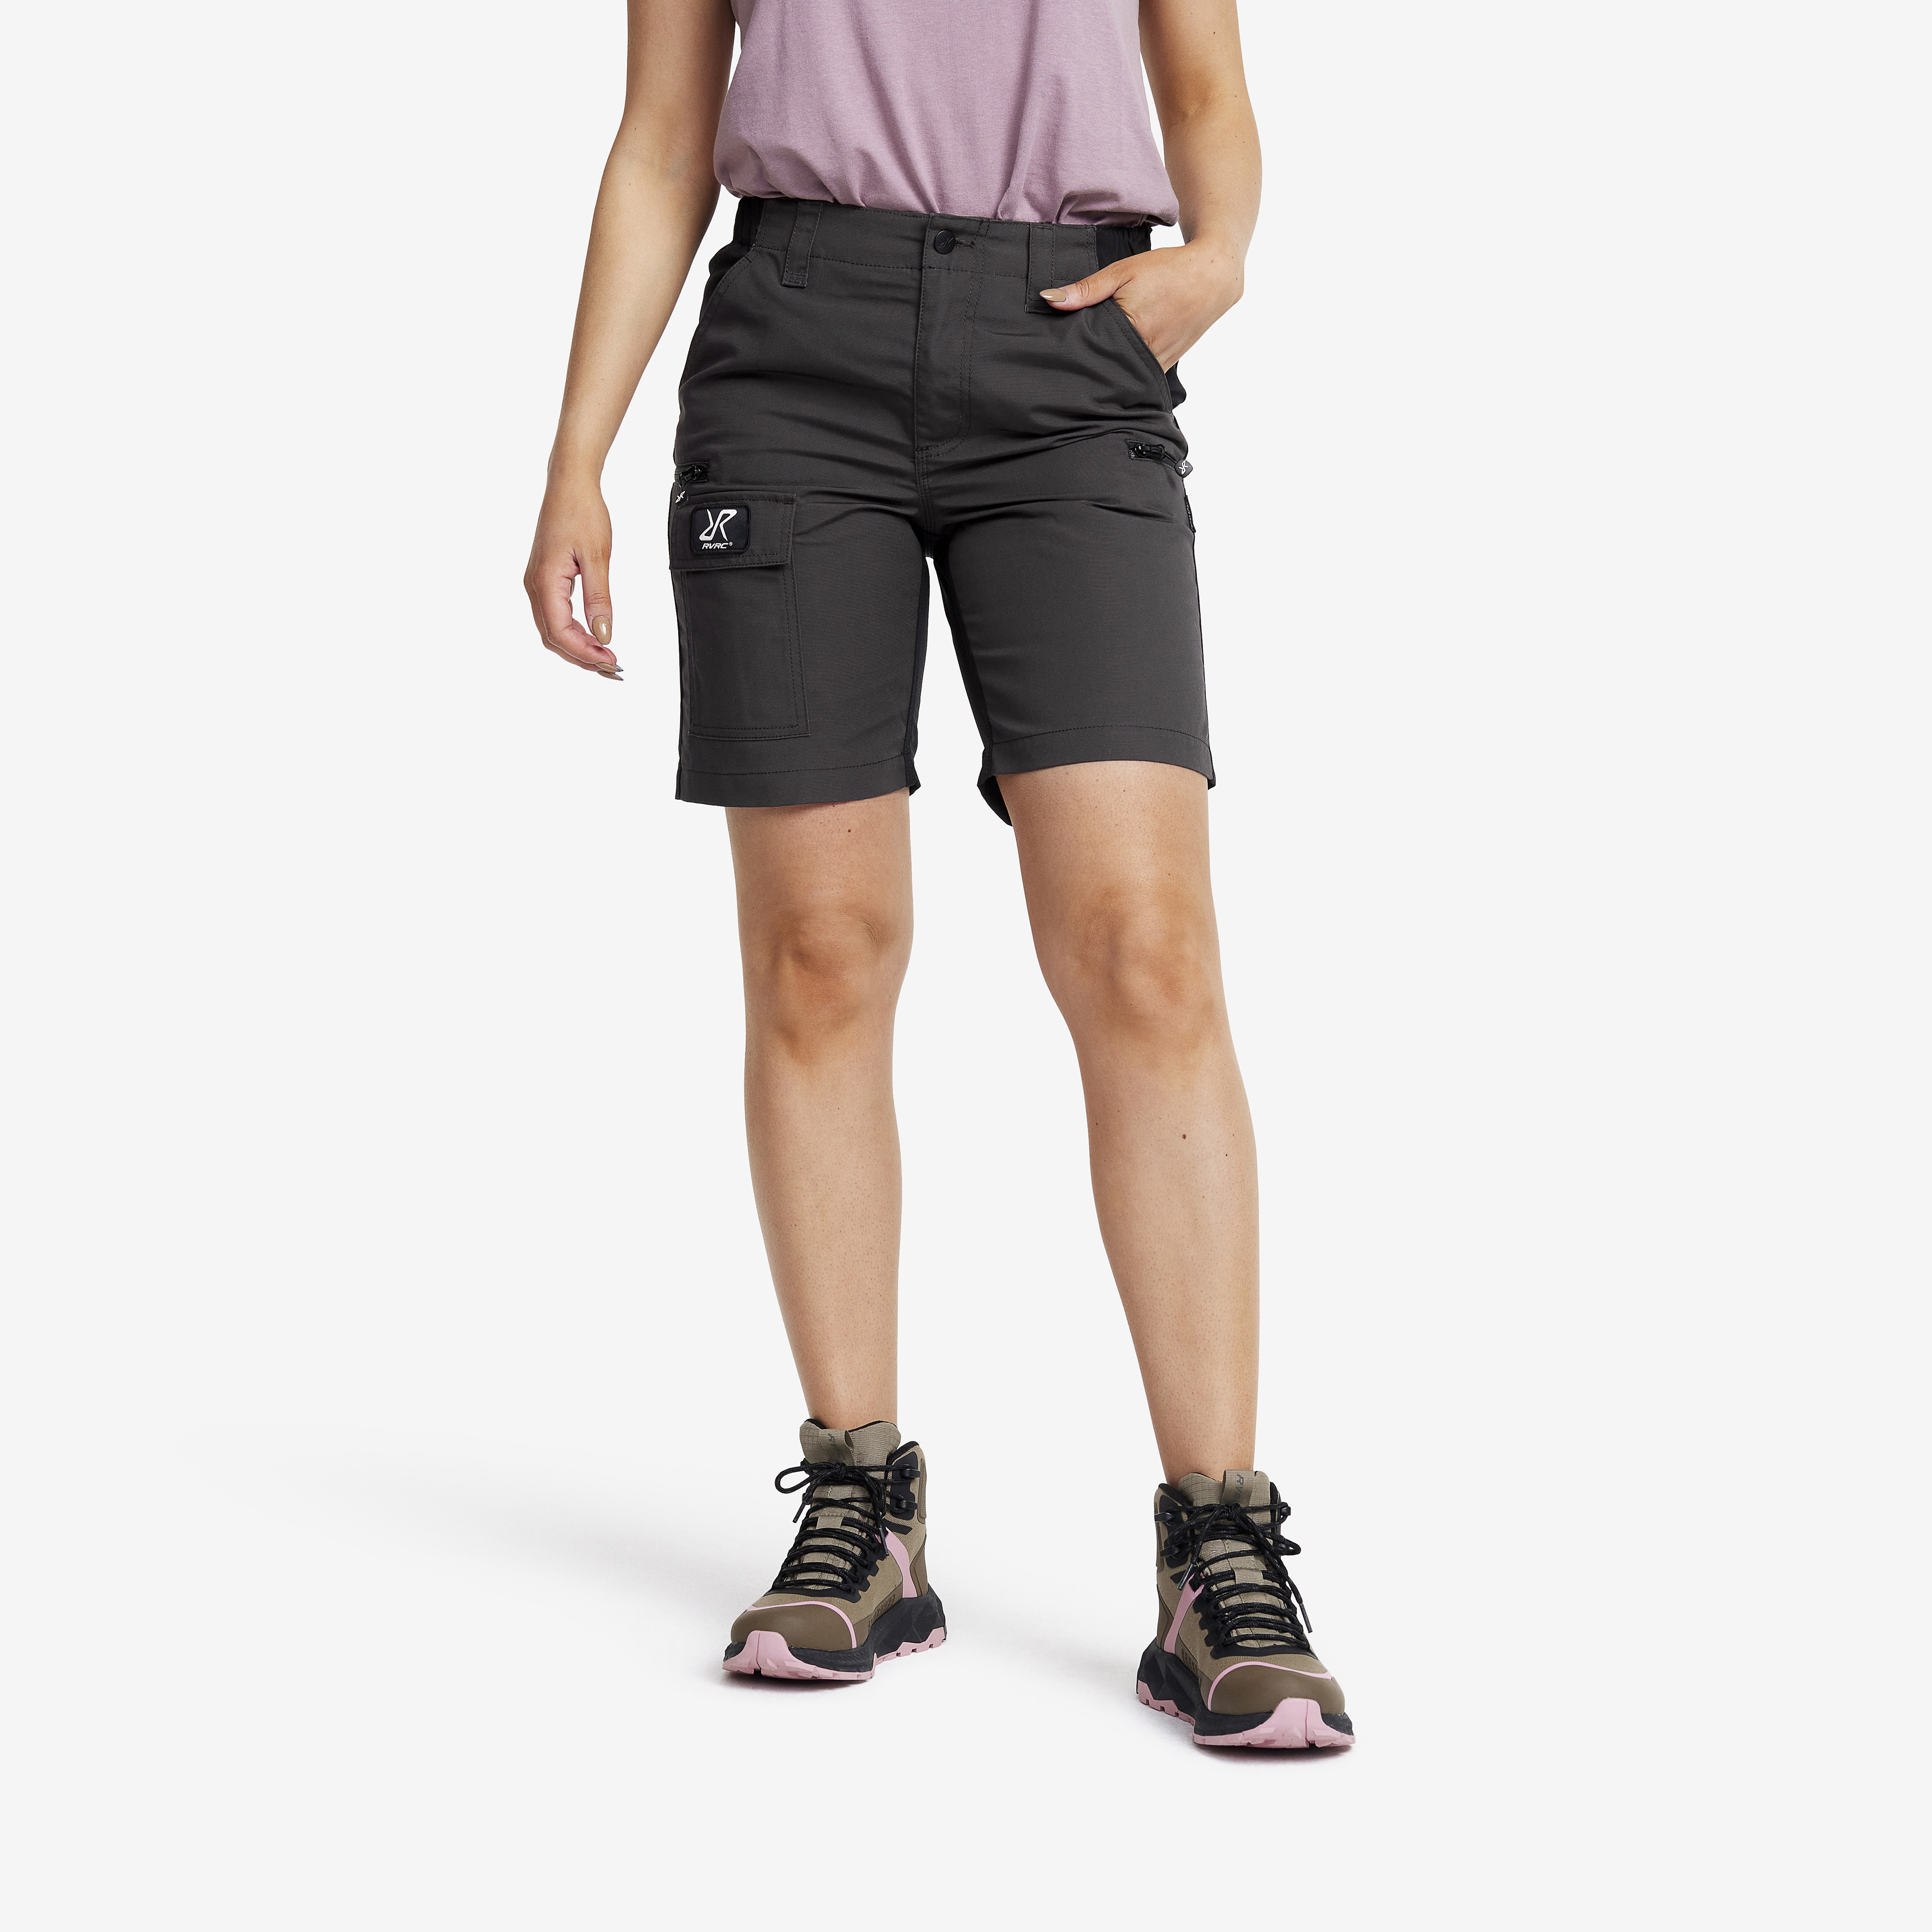 Nordwand shorts for women in dark grey